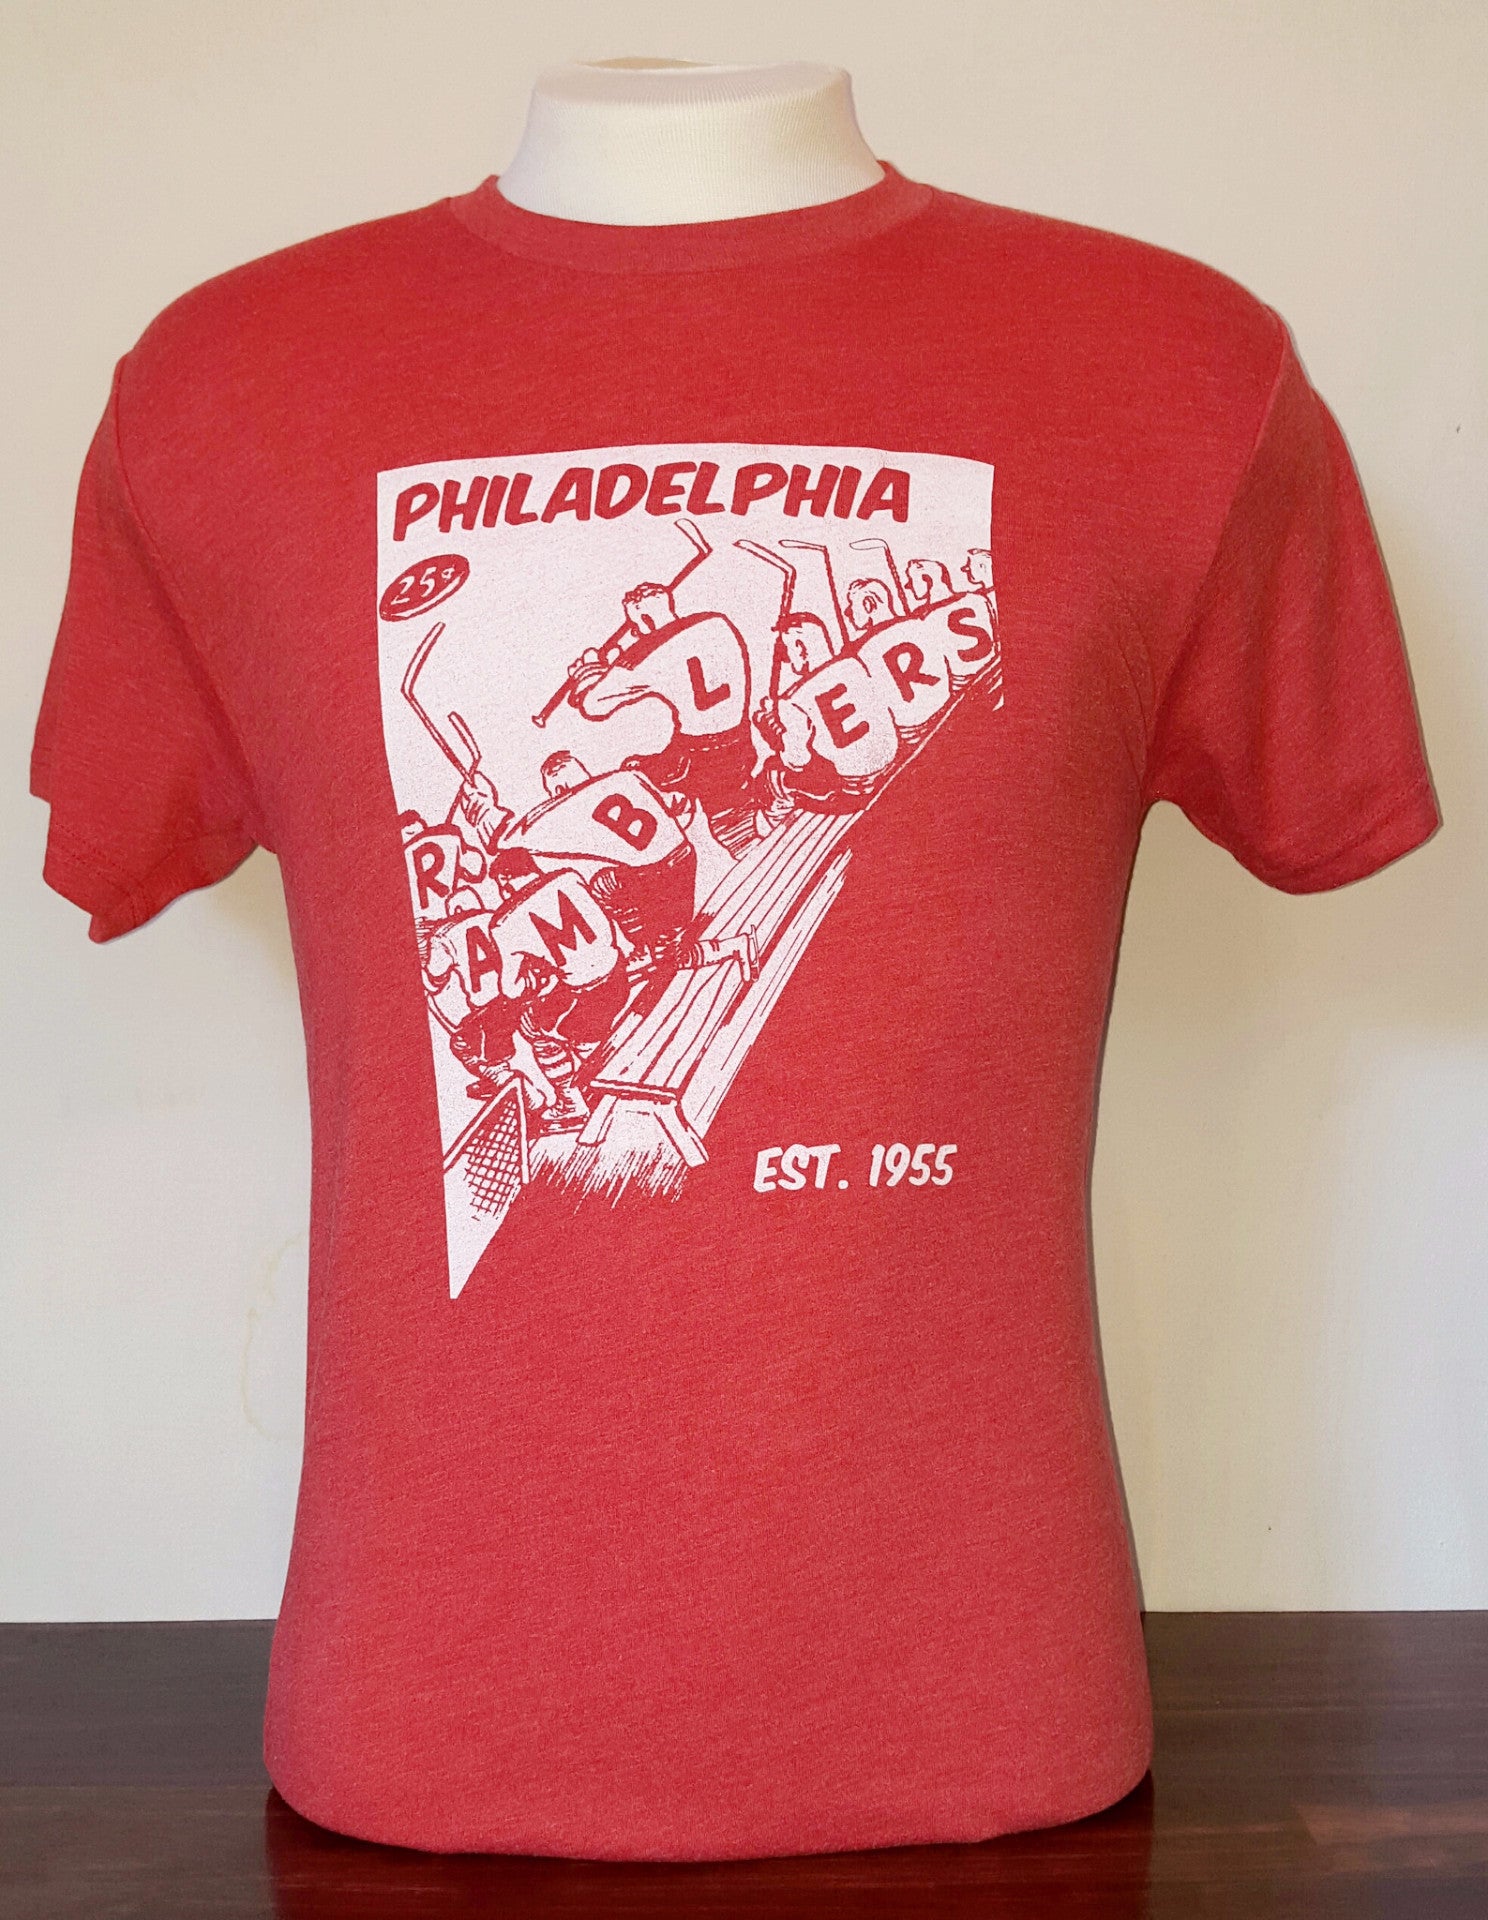 Skull Say Hi Philadelphia Flyers T Shirts – Best Funny Store